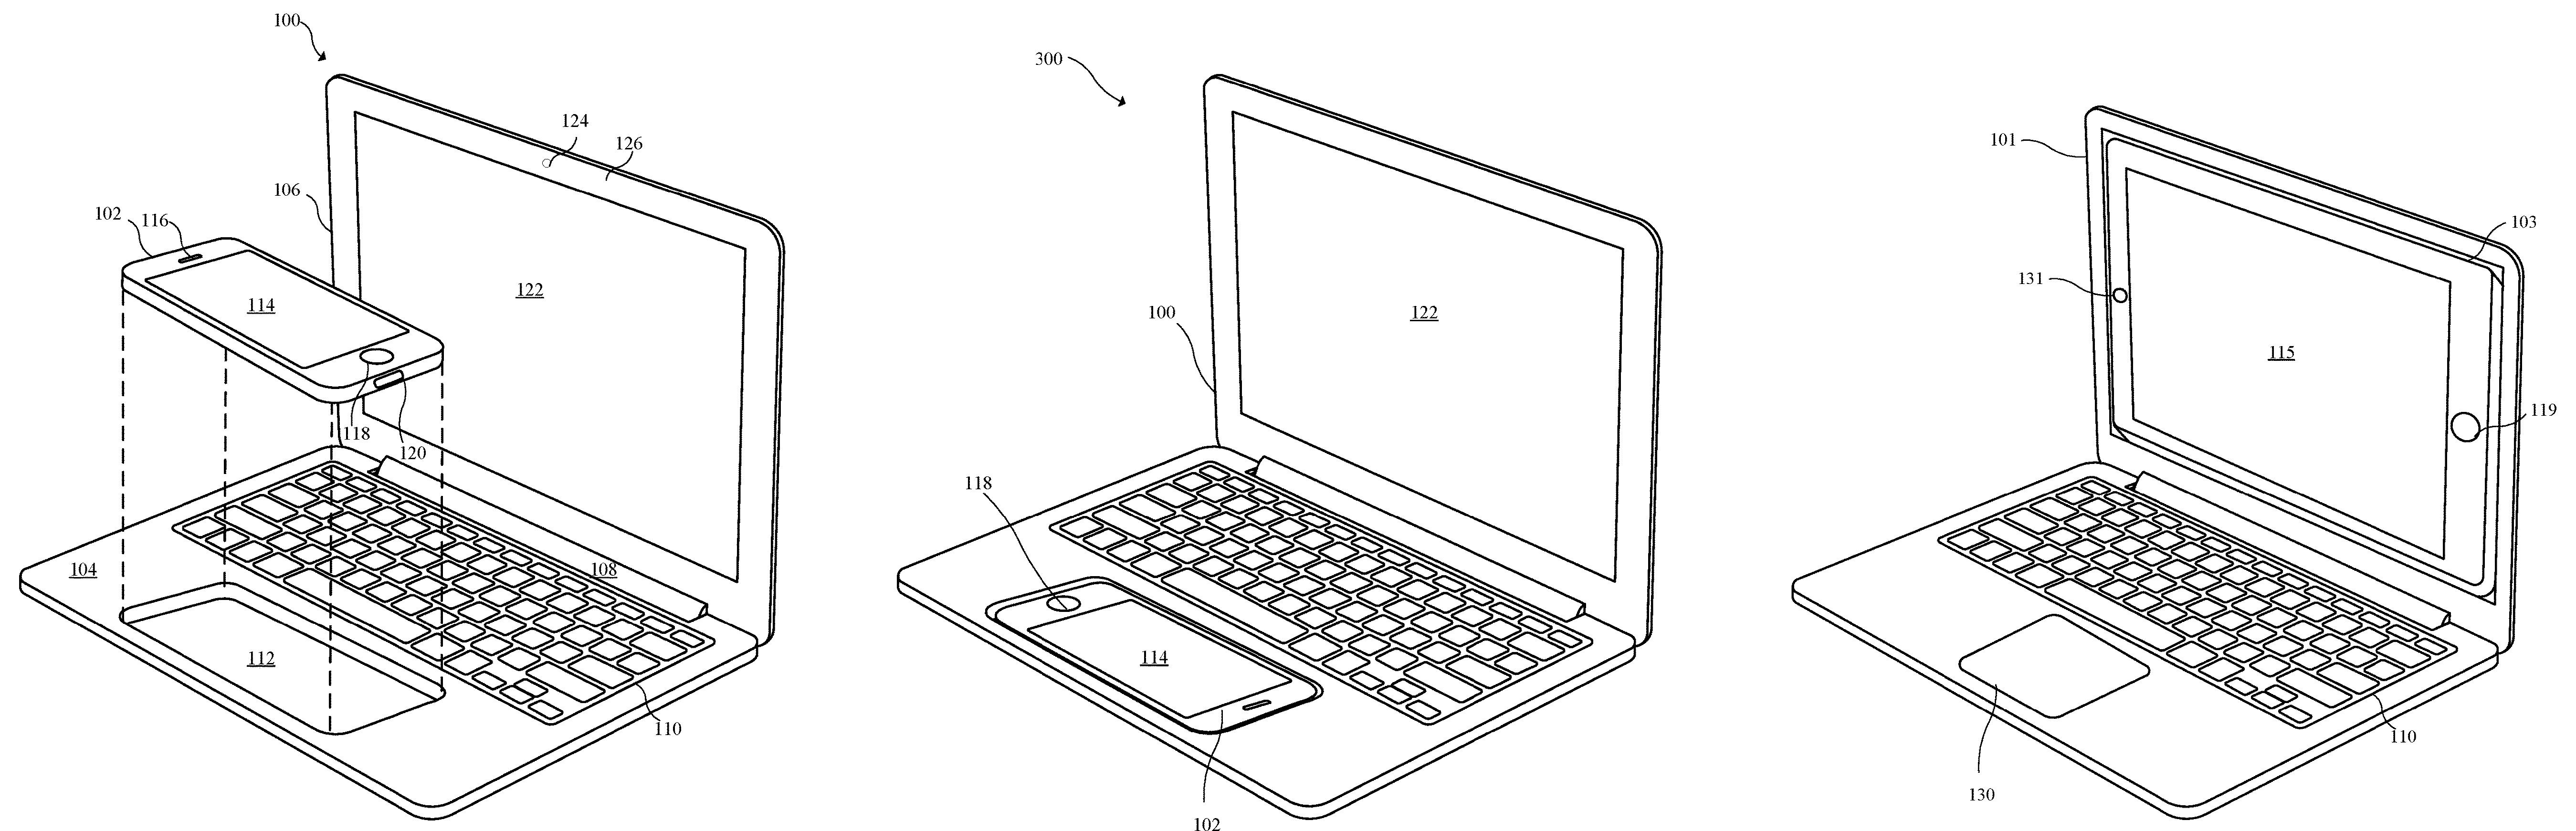 apple-patent-macbook-iphone-ipad-dock